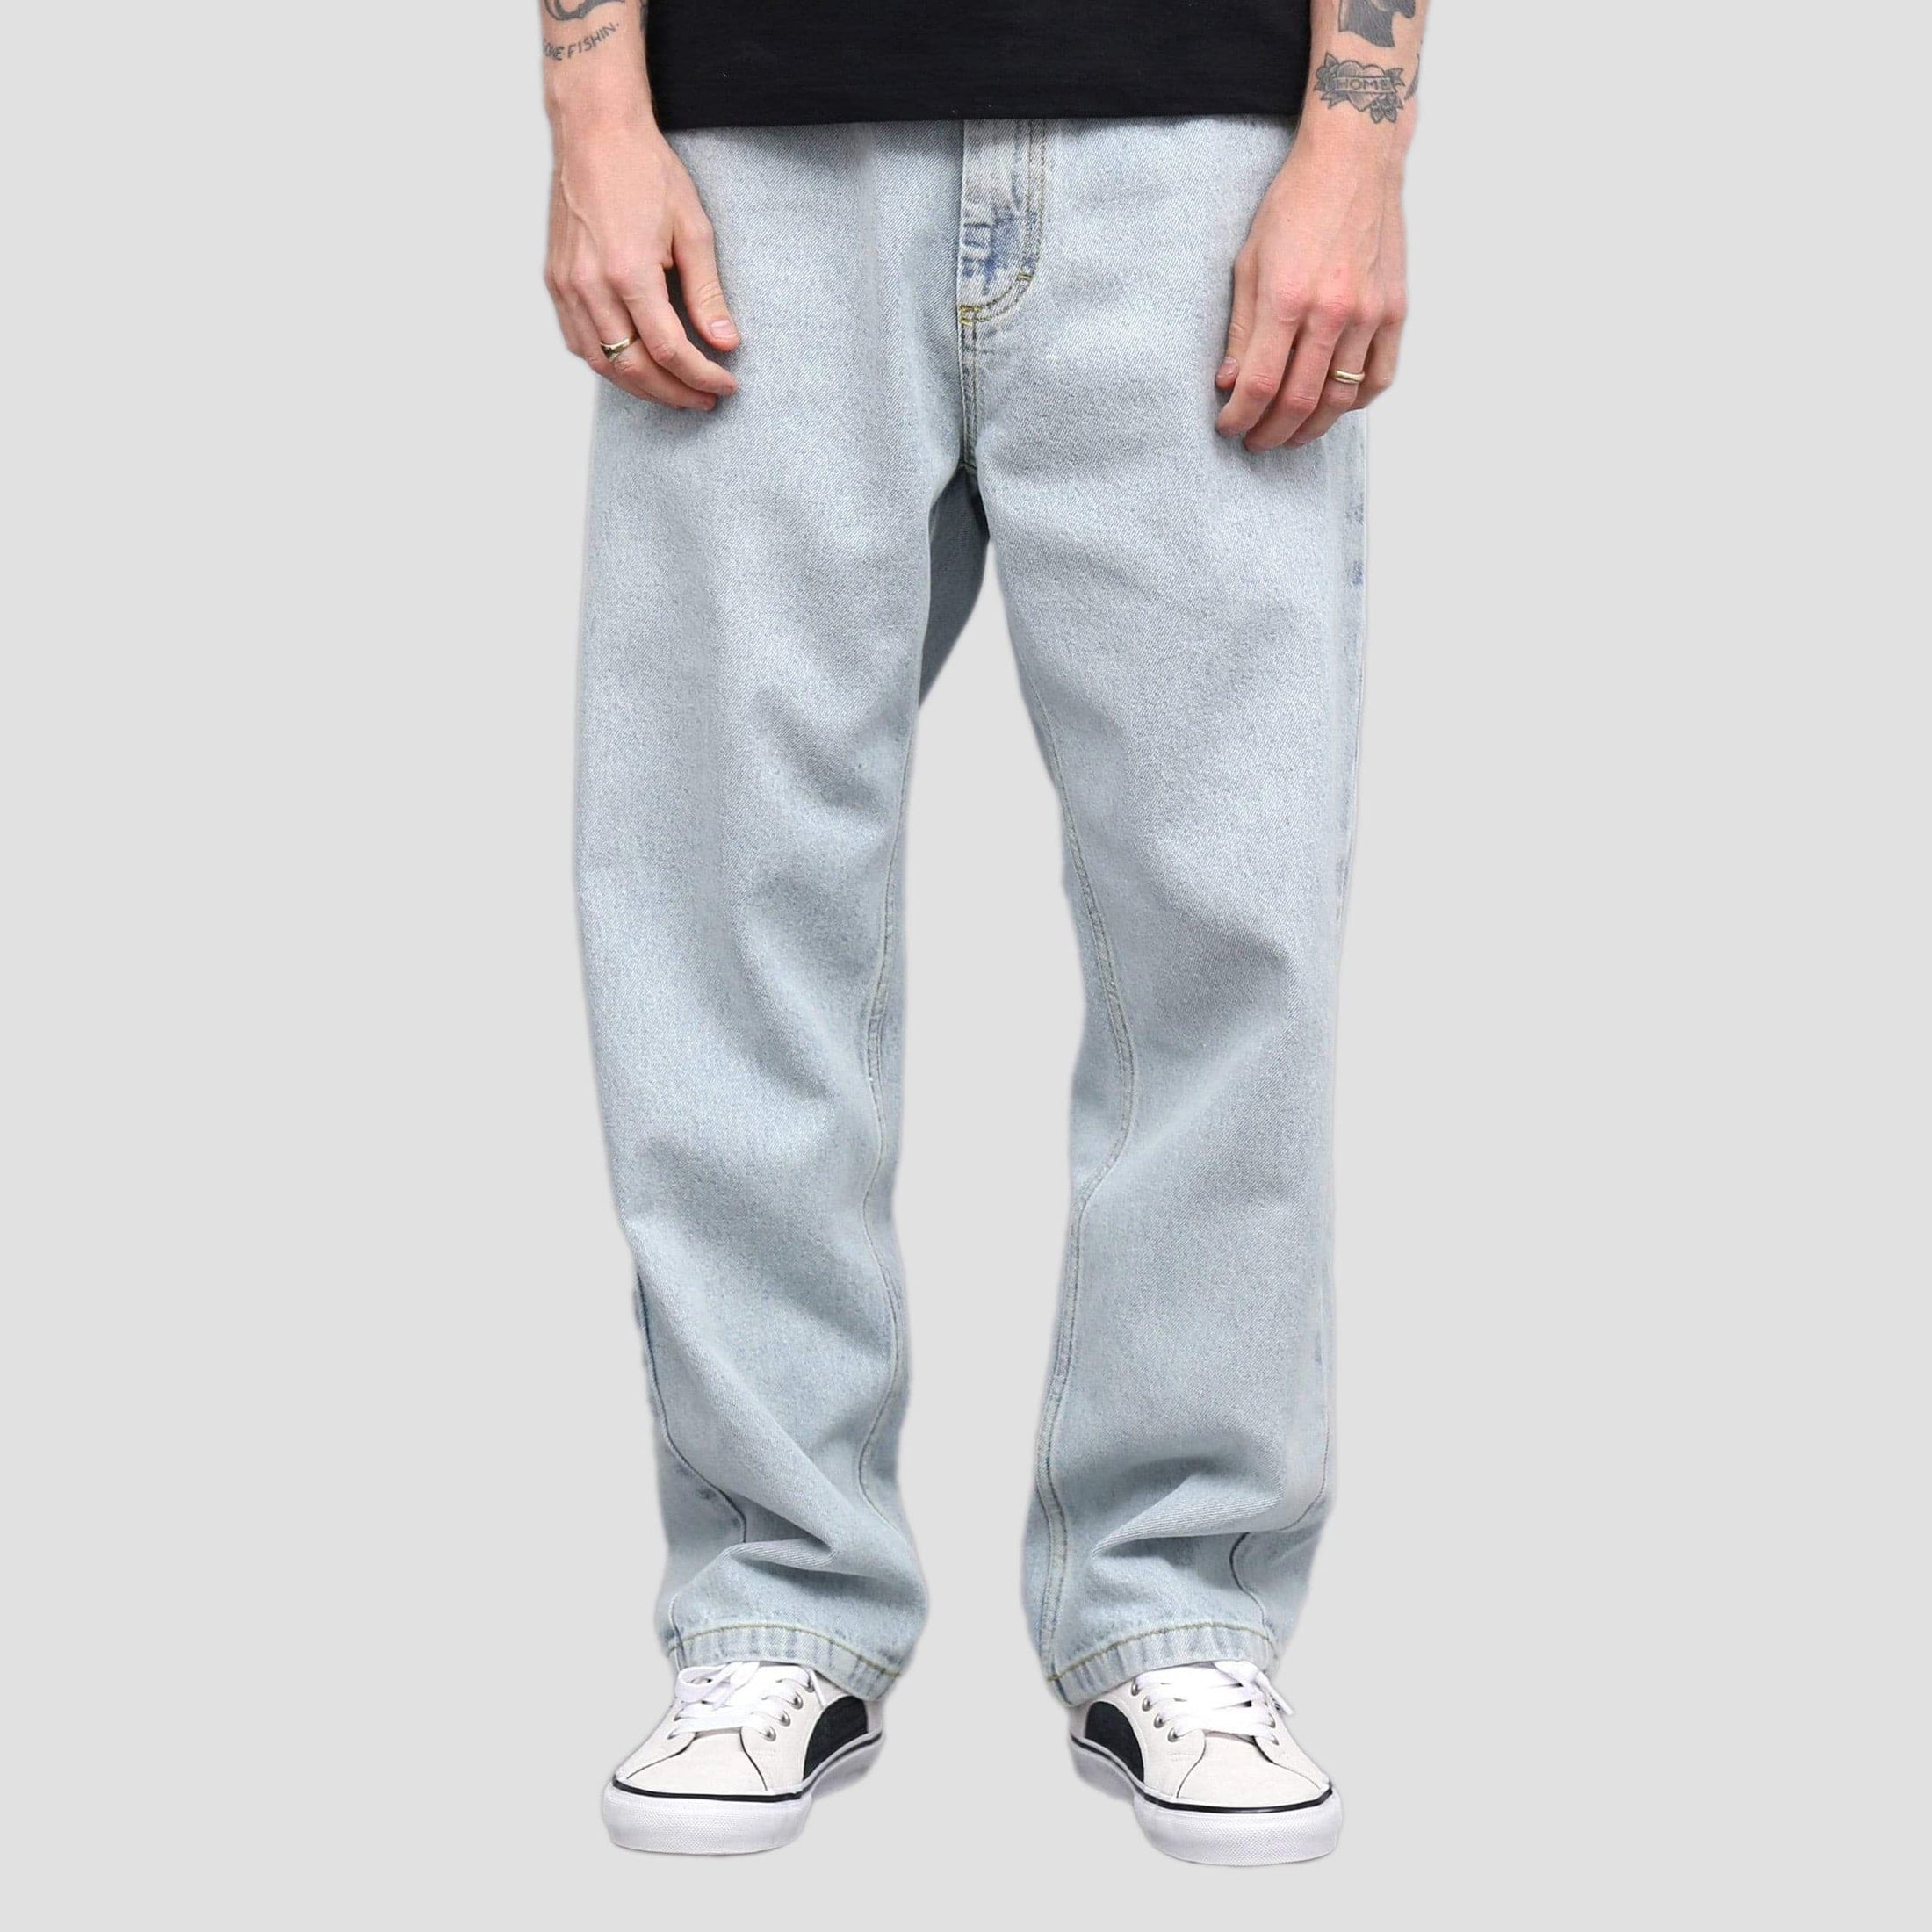 Polar '93 Denim Jeans